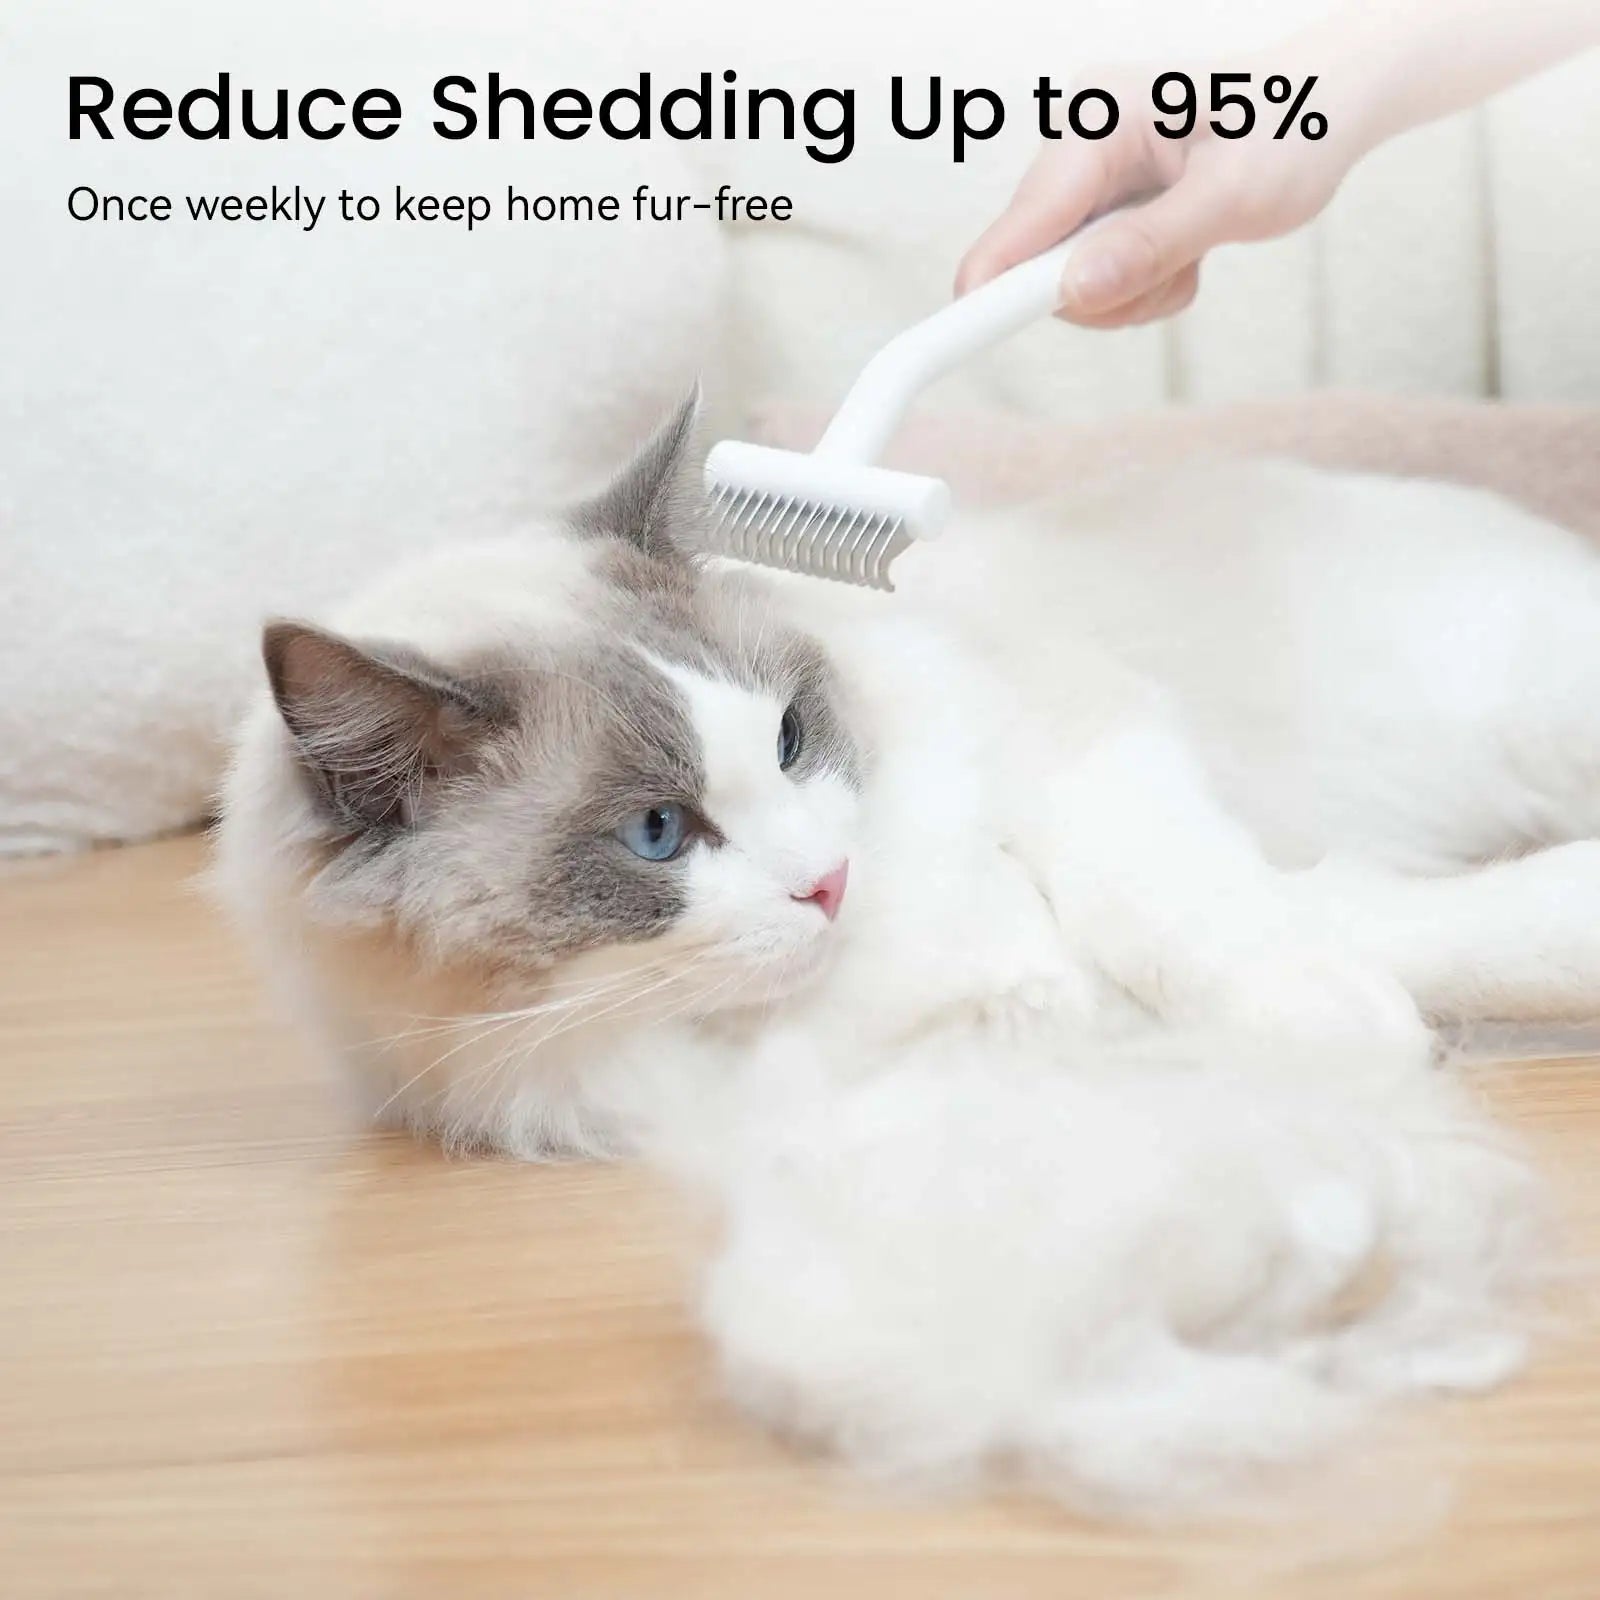 Pet de-matting tool Grooming Brush - remover knots mat for Shedding, Dematting Undercoat Rake for longhaired Cats Grooming Brush Reduce Shedding by 95%